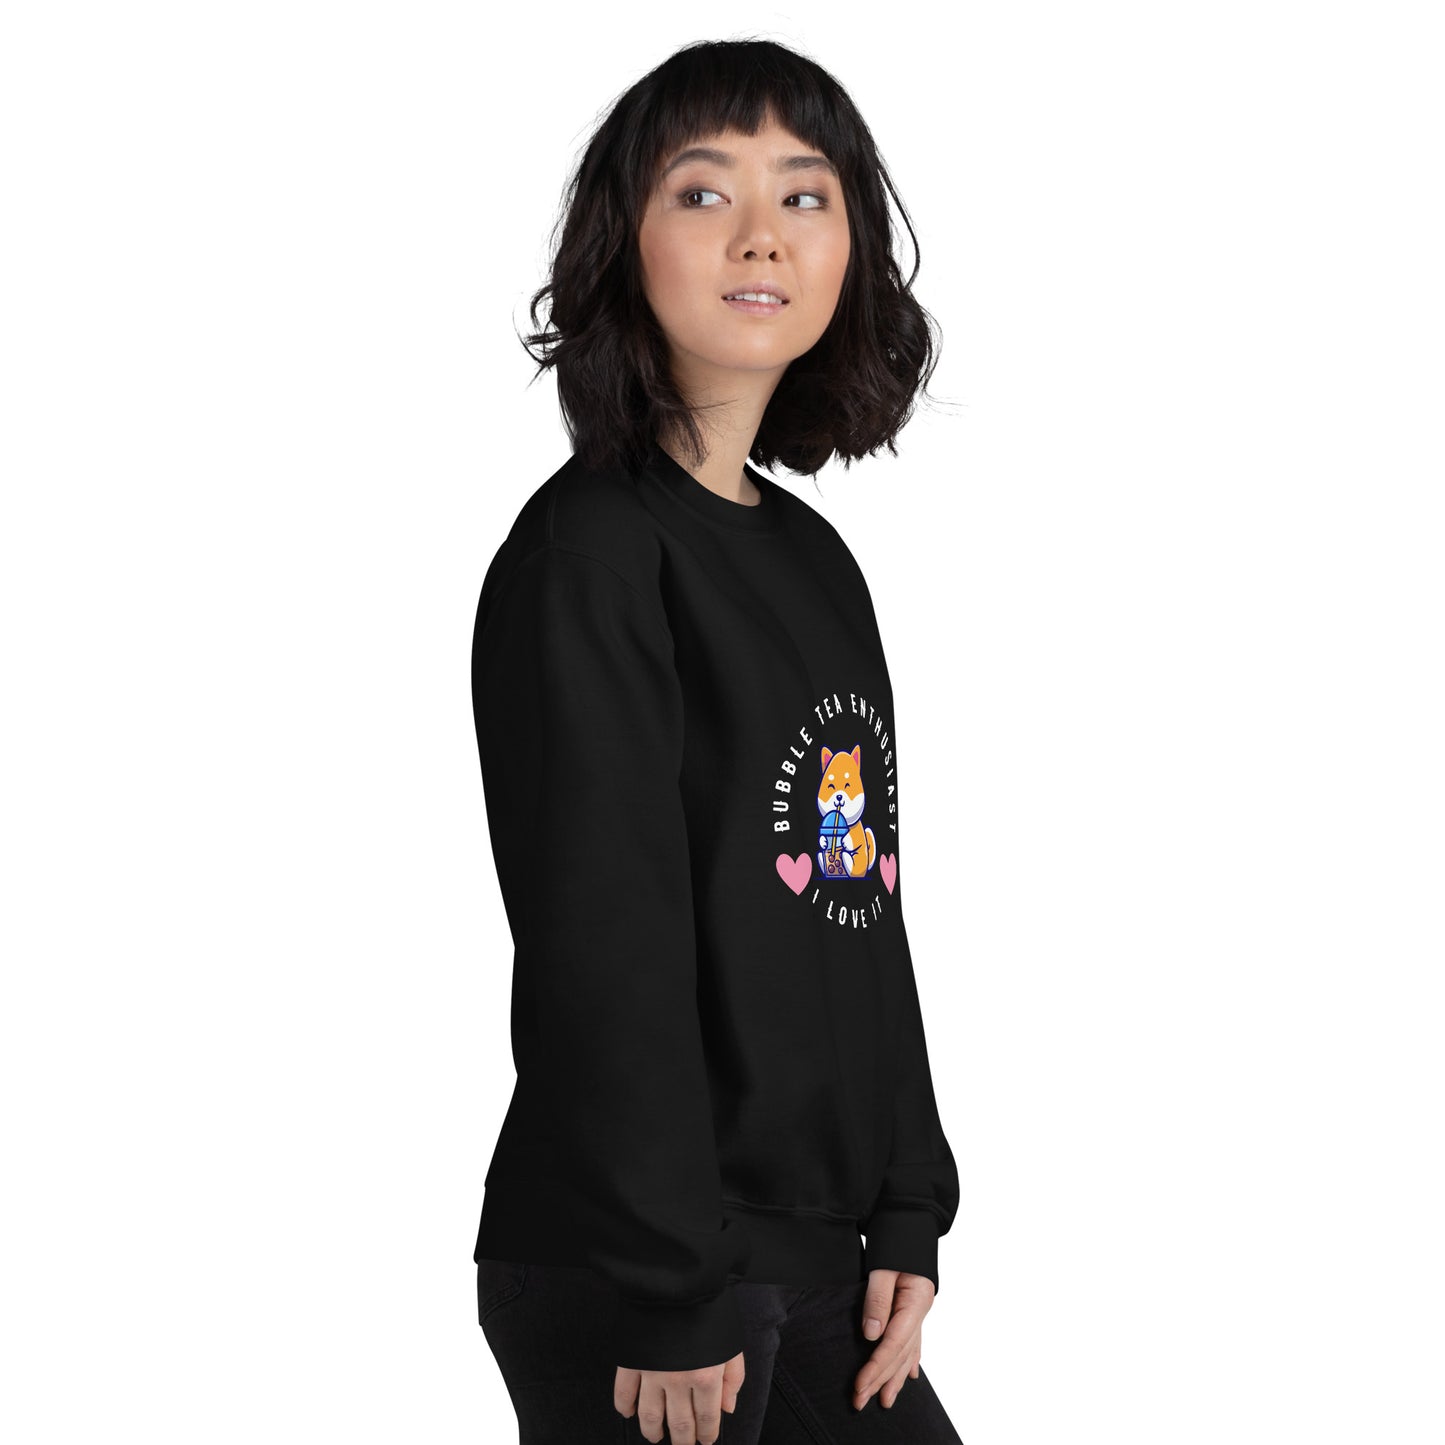 Bubble Tea Enthusiast - Unisex Sweatshirt ~ Sharon Dawn Collection